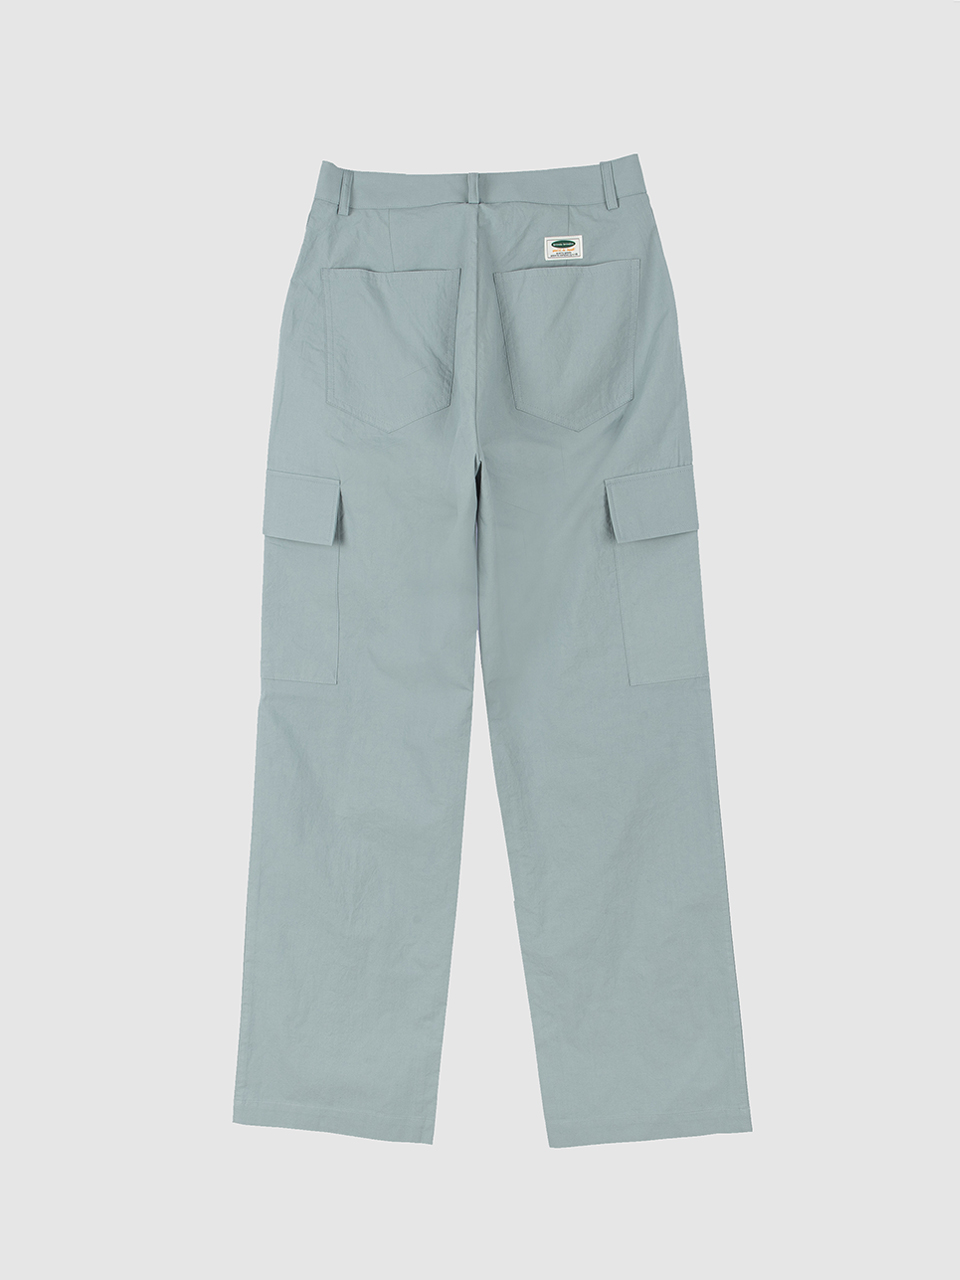 5th / forest cargo pants - middle blueBRENDA BRENDEN